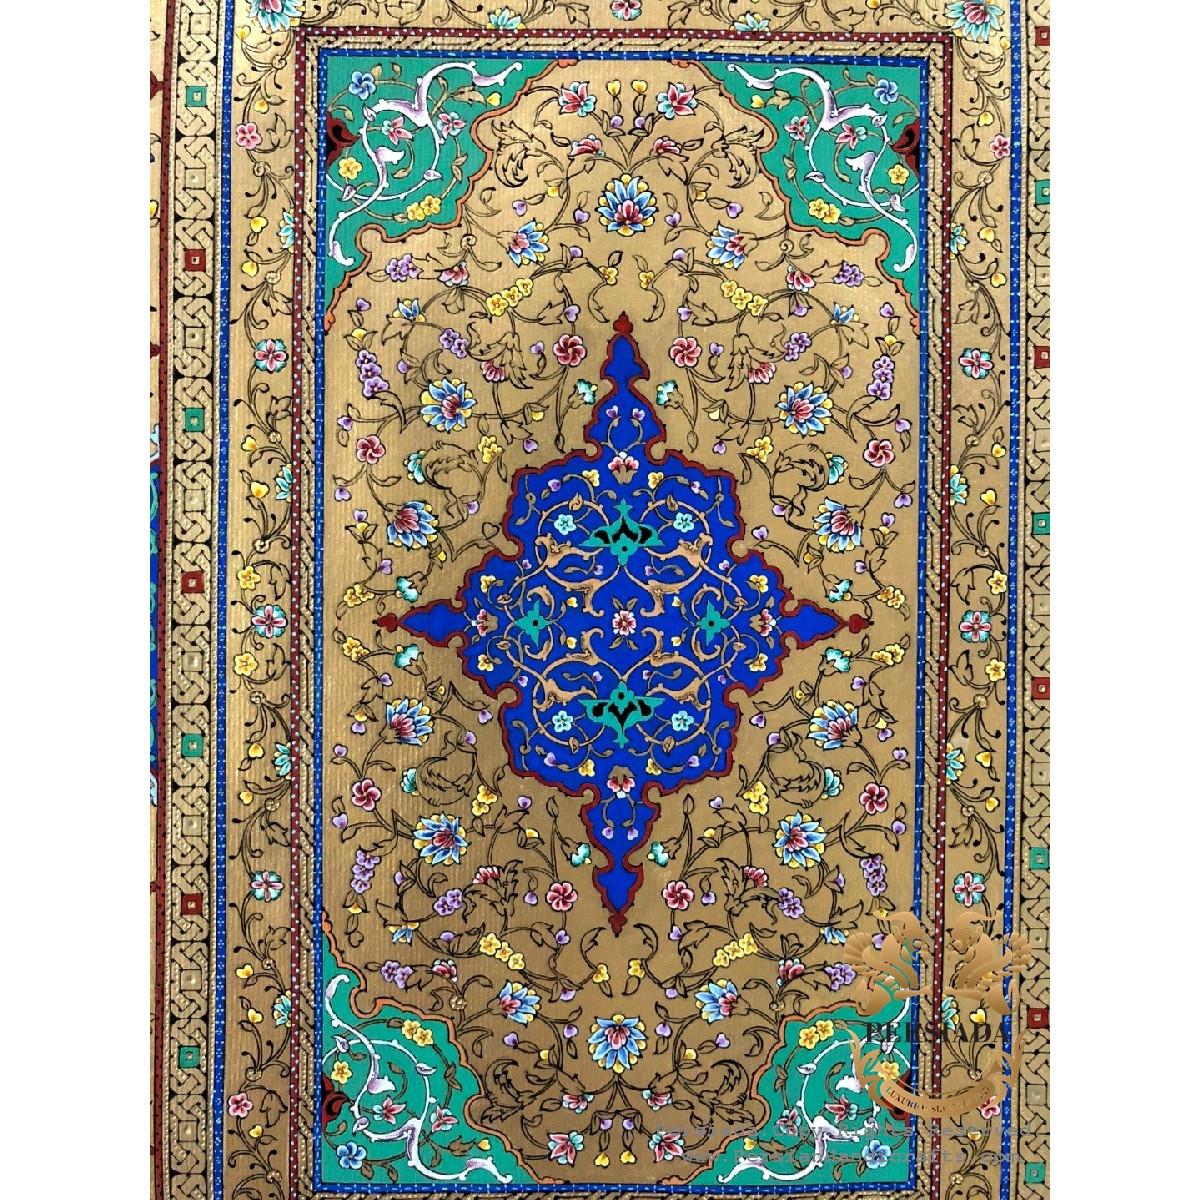 Decorative Frame | Persian Miniature | PHM1004-Persiada Persian Handicrafts